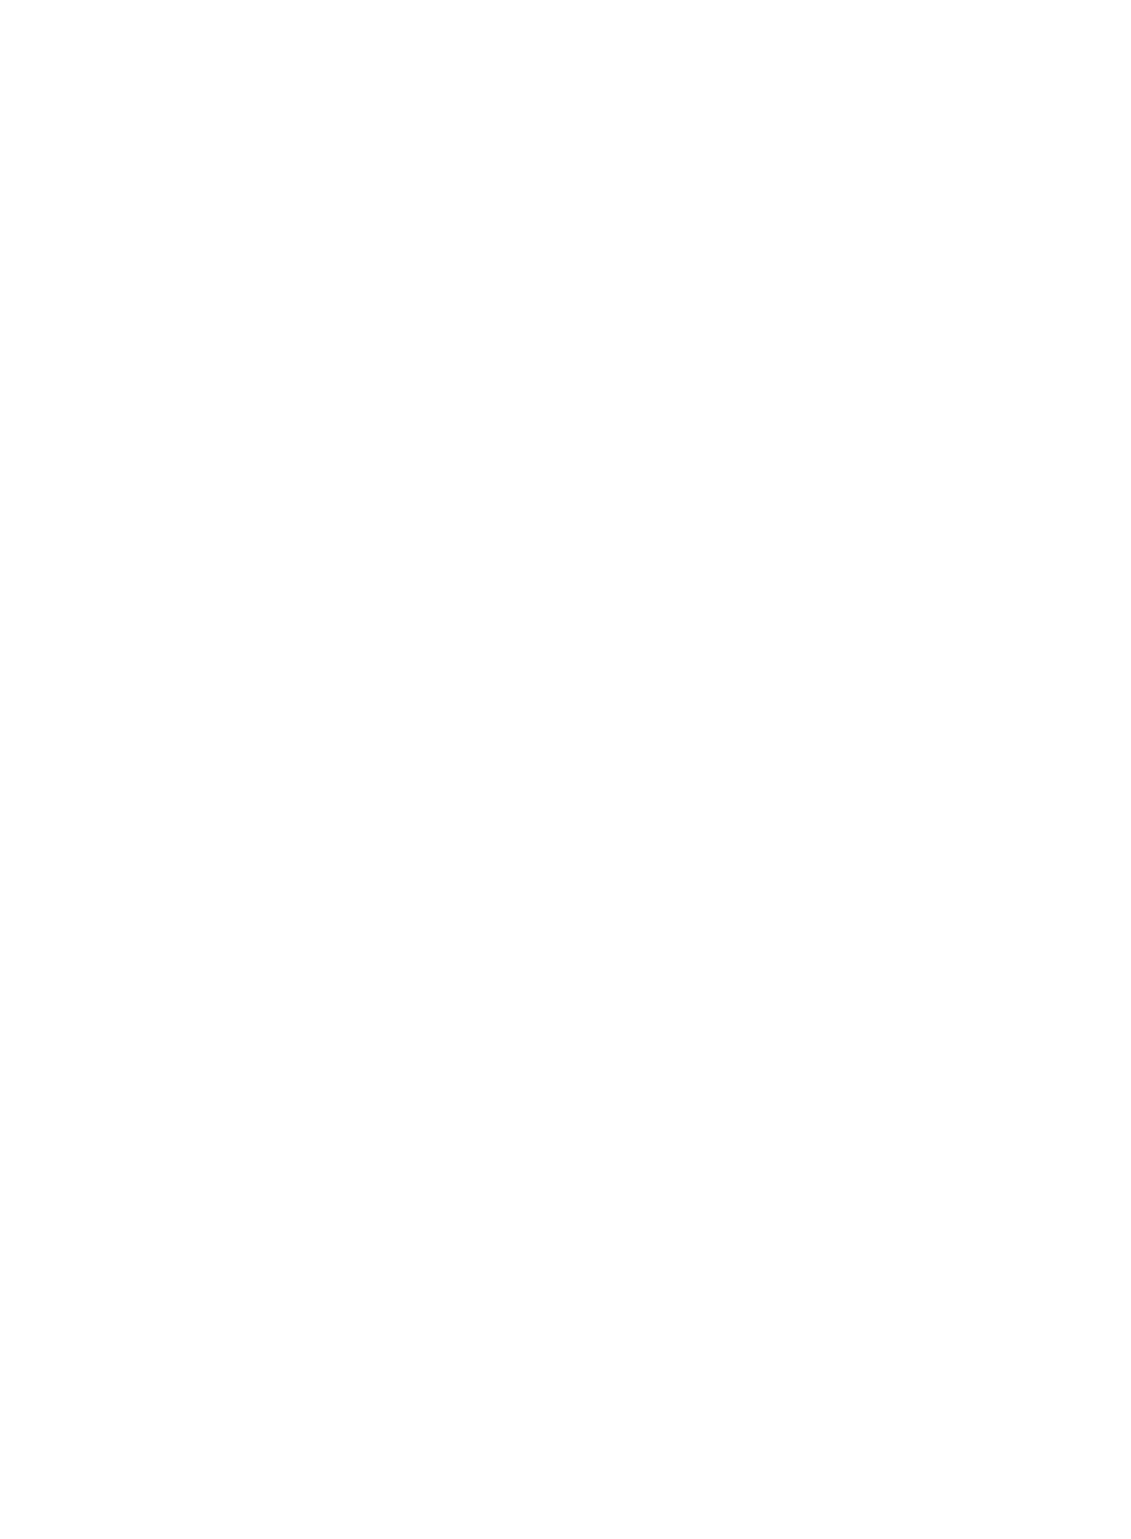 Dutch Bros logo for dark backgrounds (transparent PNG)